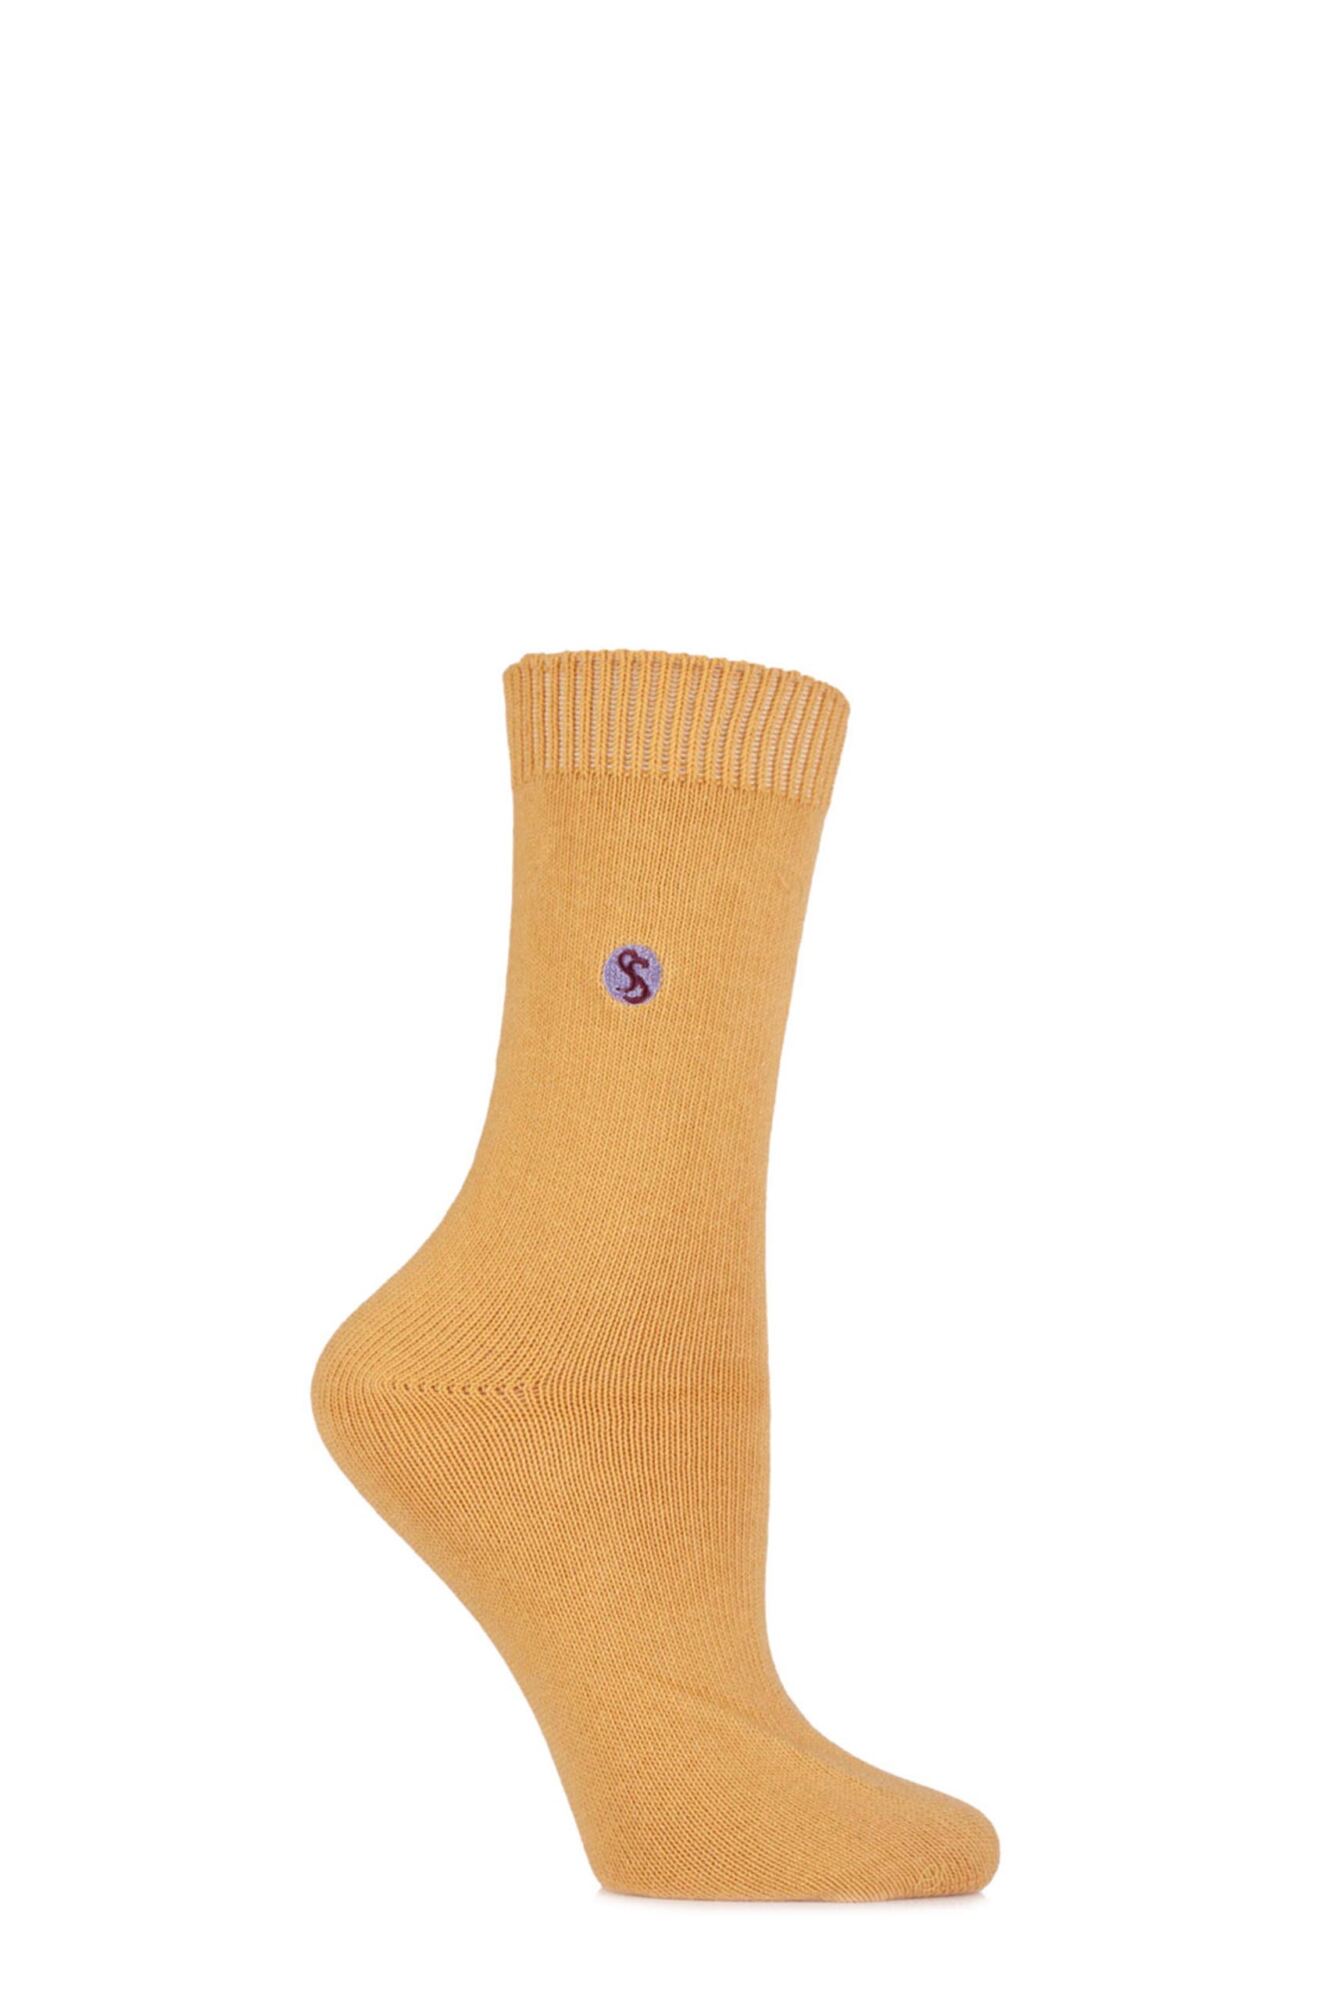 1 Pair Colour Burst Cotton Socks with Smooth Toe Seams Ladies - SOCKSHOP